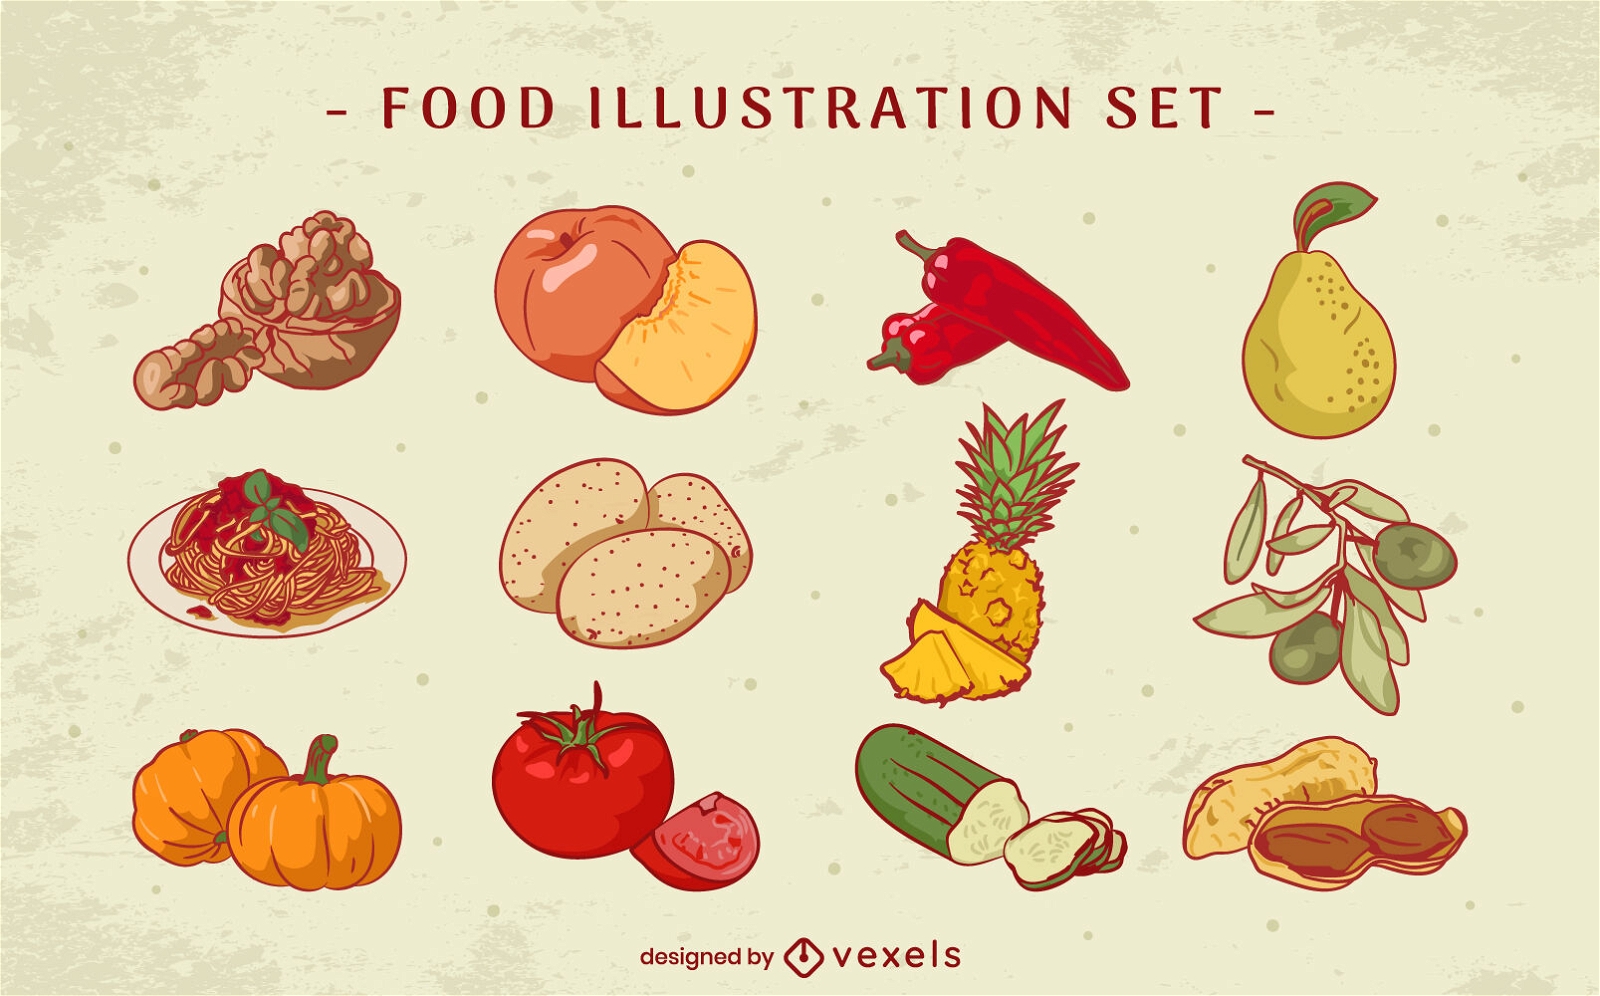 Food elements and ingredients illustration set